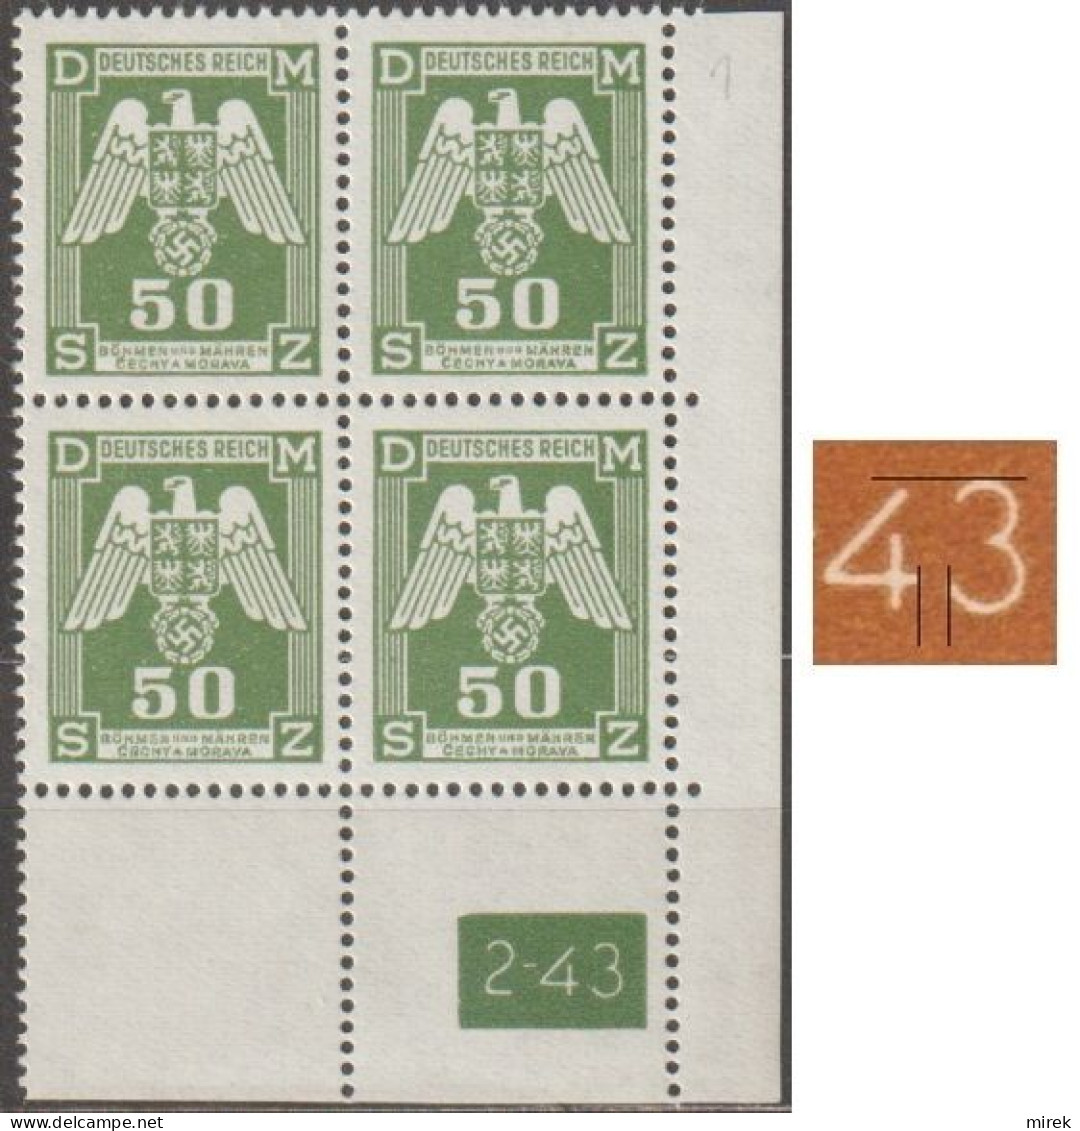 052/ Pof. SL 15, Corner Stamps, Plate Number 2-43, Type 2, Var. 1 - Neufs